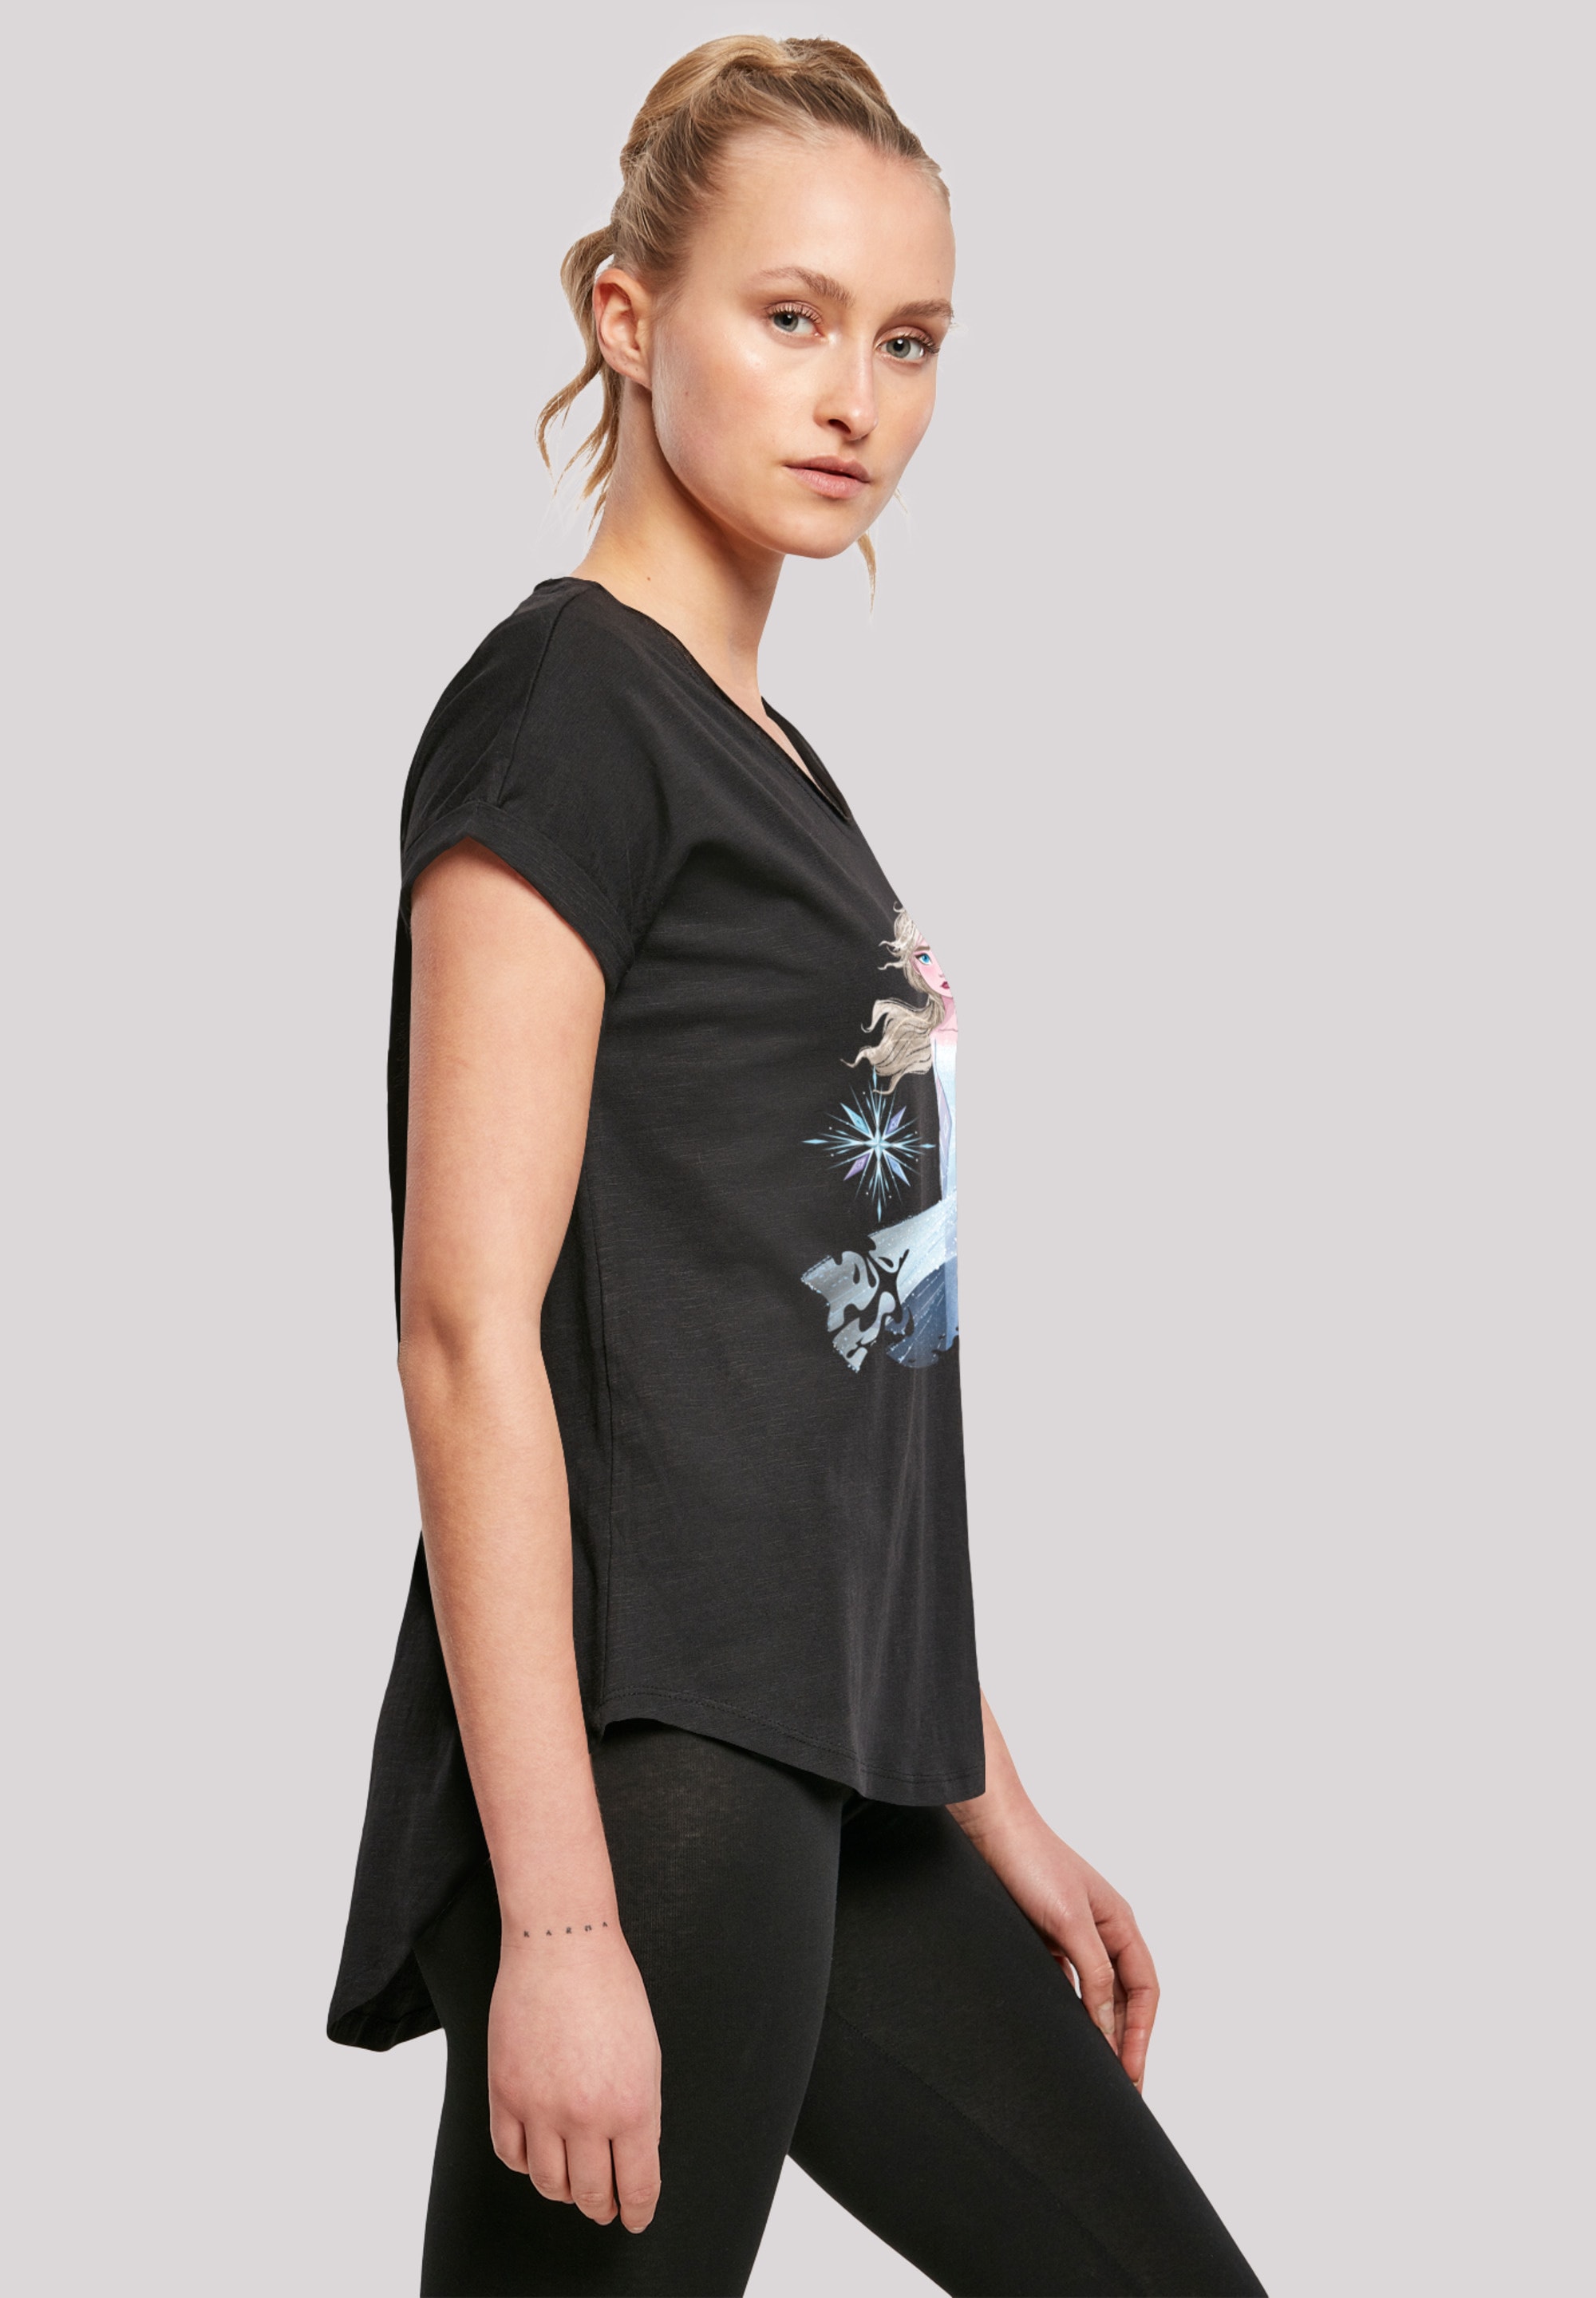 Nokk | Elsa Pferd\'«, 2 walking Frozen F4NT4STIC T-Shirt kaufen I\'m Print »Disney Wassergeist